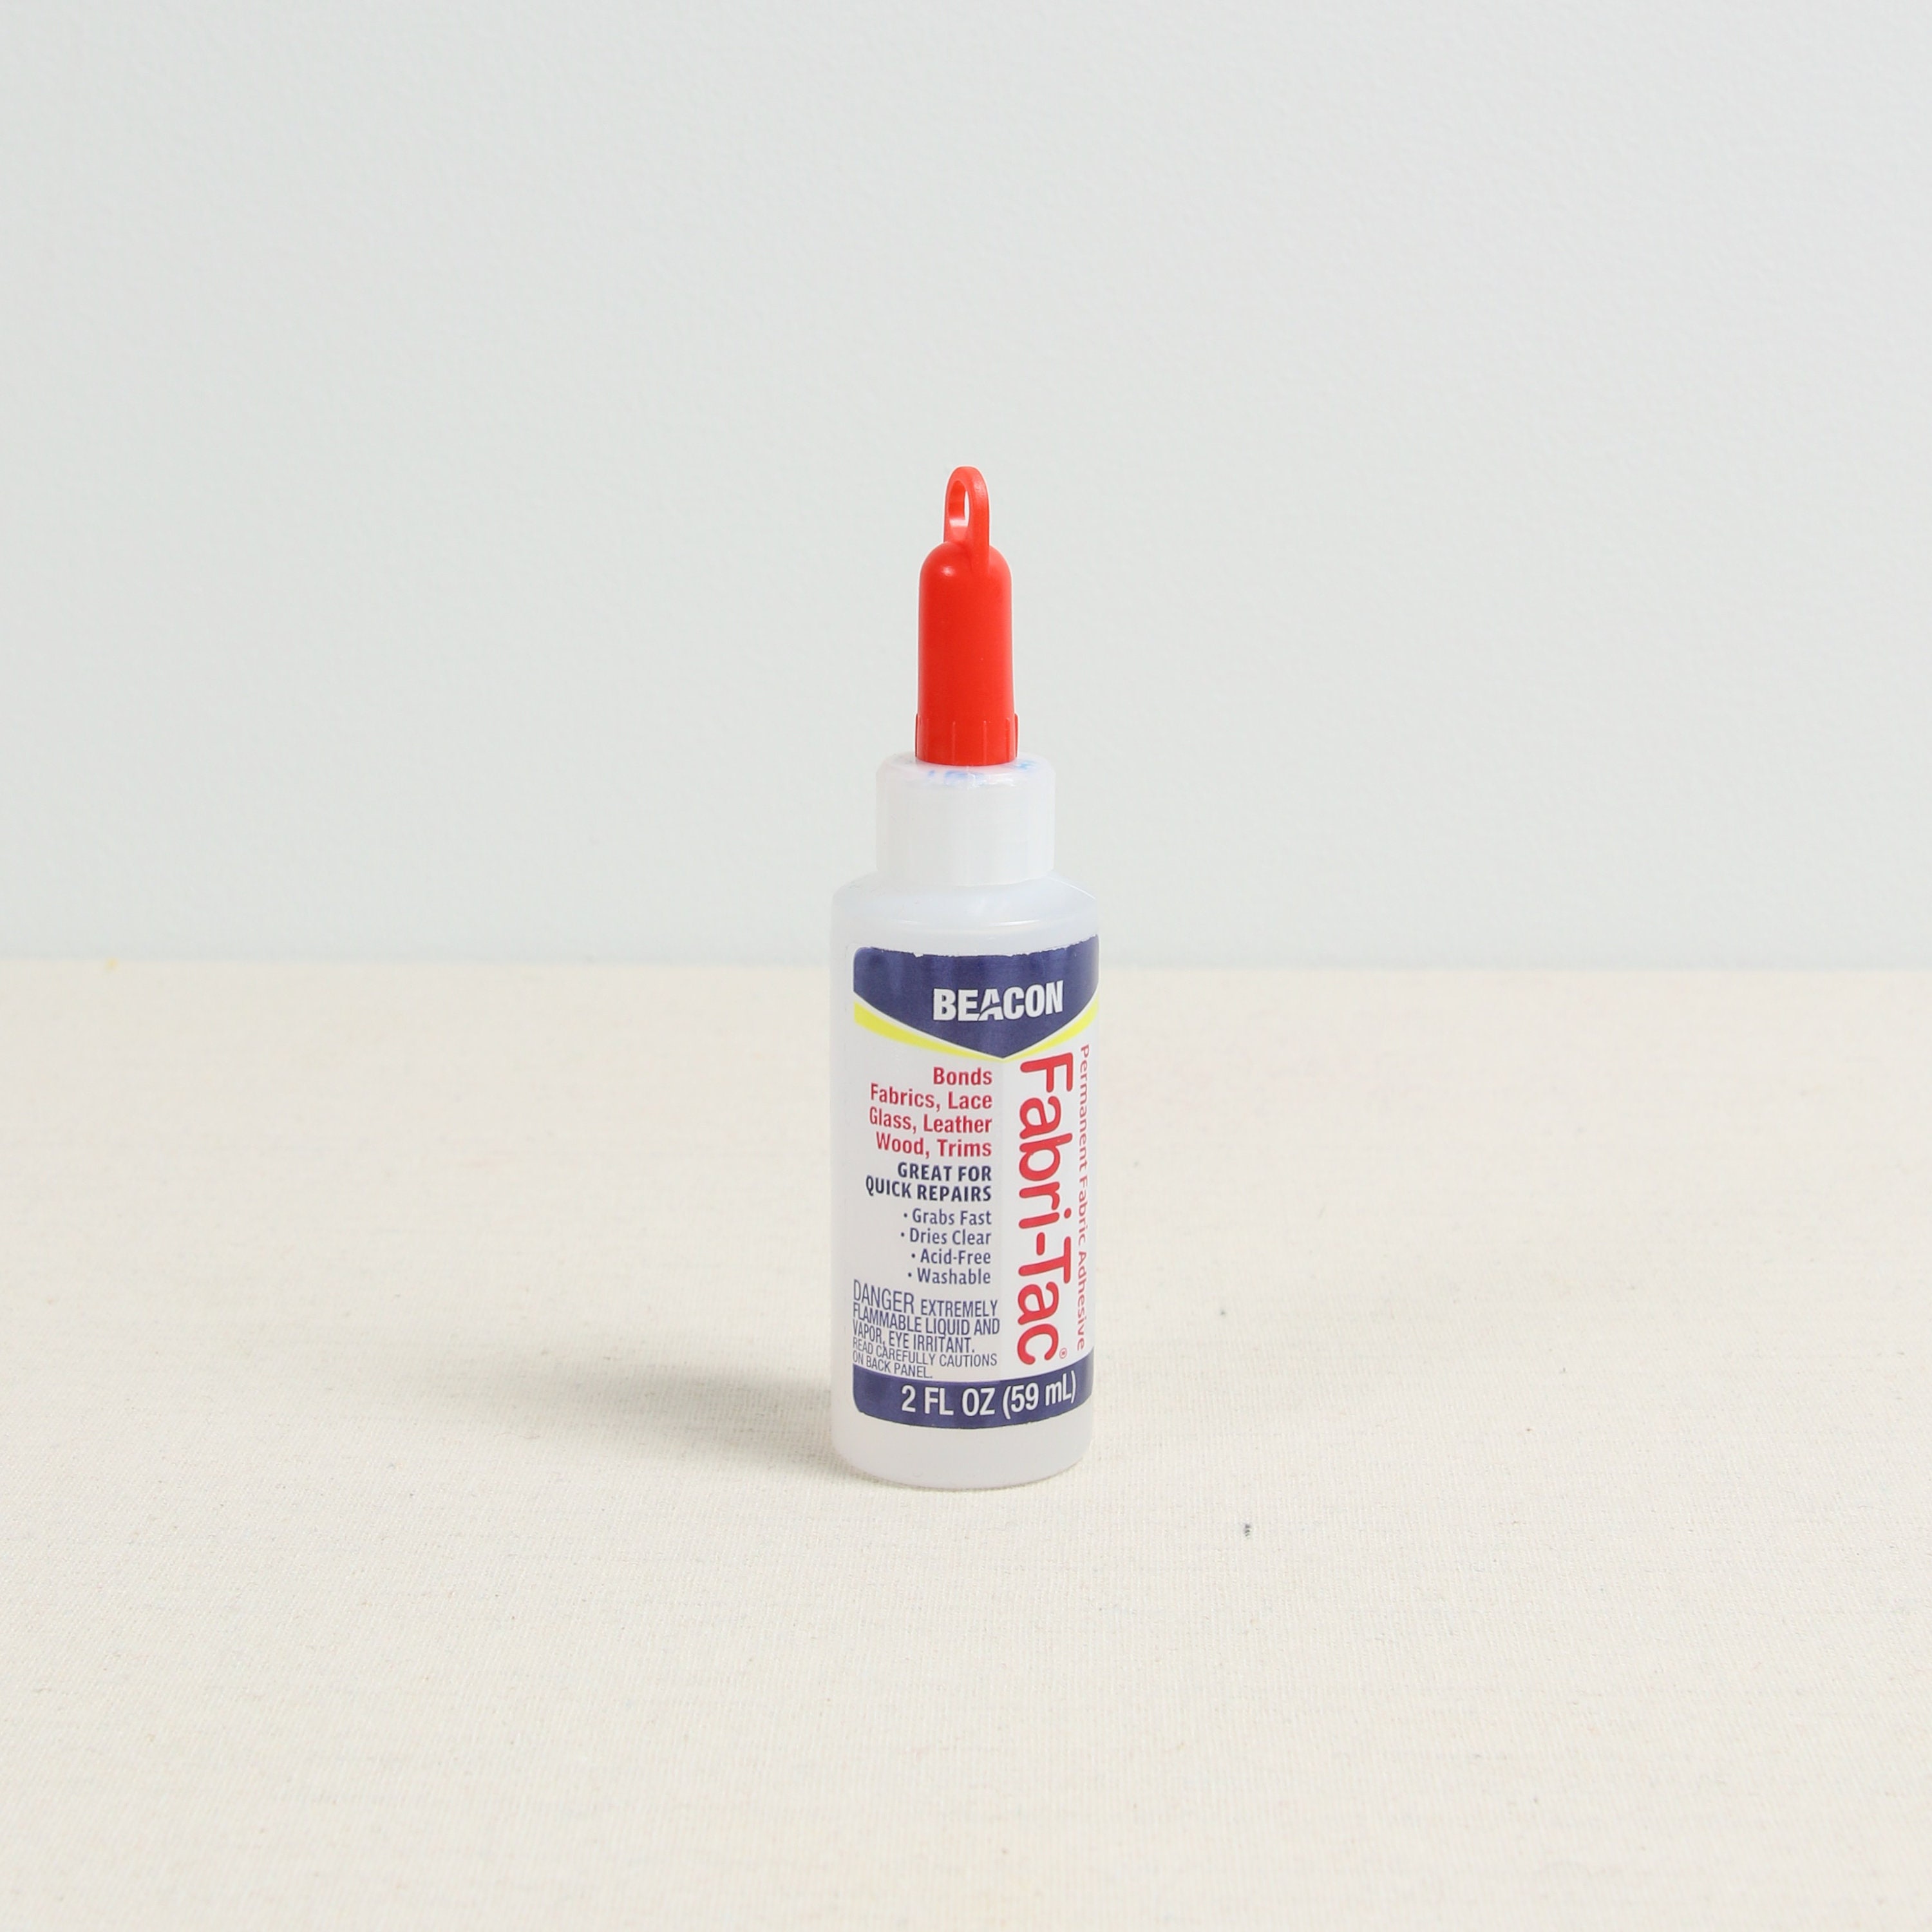 Beacon Gem-tac Permanent Adhesive. 4 Oz. Dries Clear. Rhinestone, Crystal,  Sequins Glue Adhesive. Non Toxic, Washable, Clear Glue Adhesive 